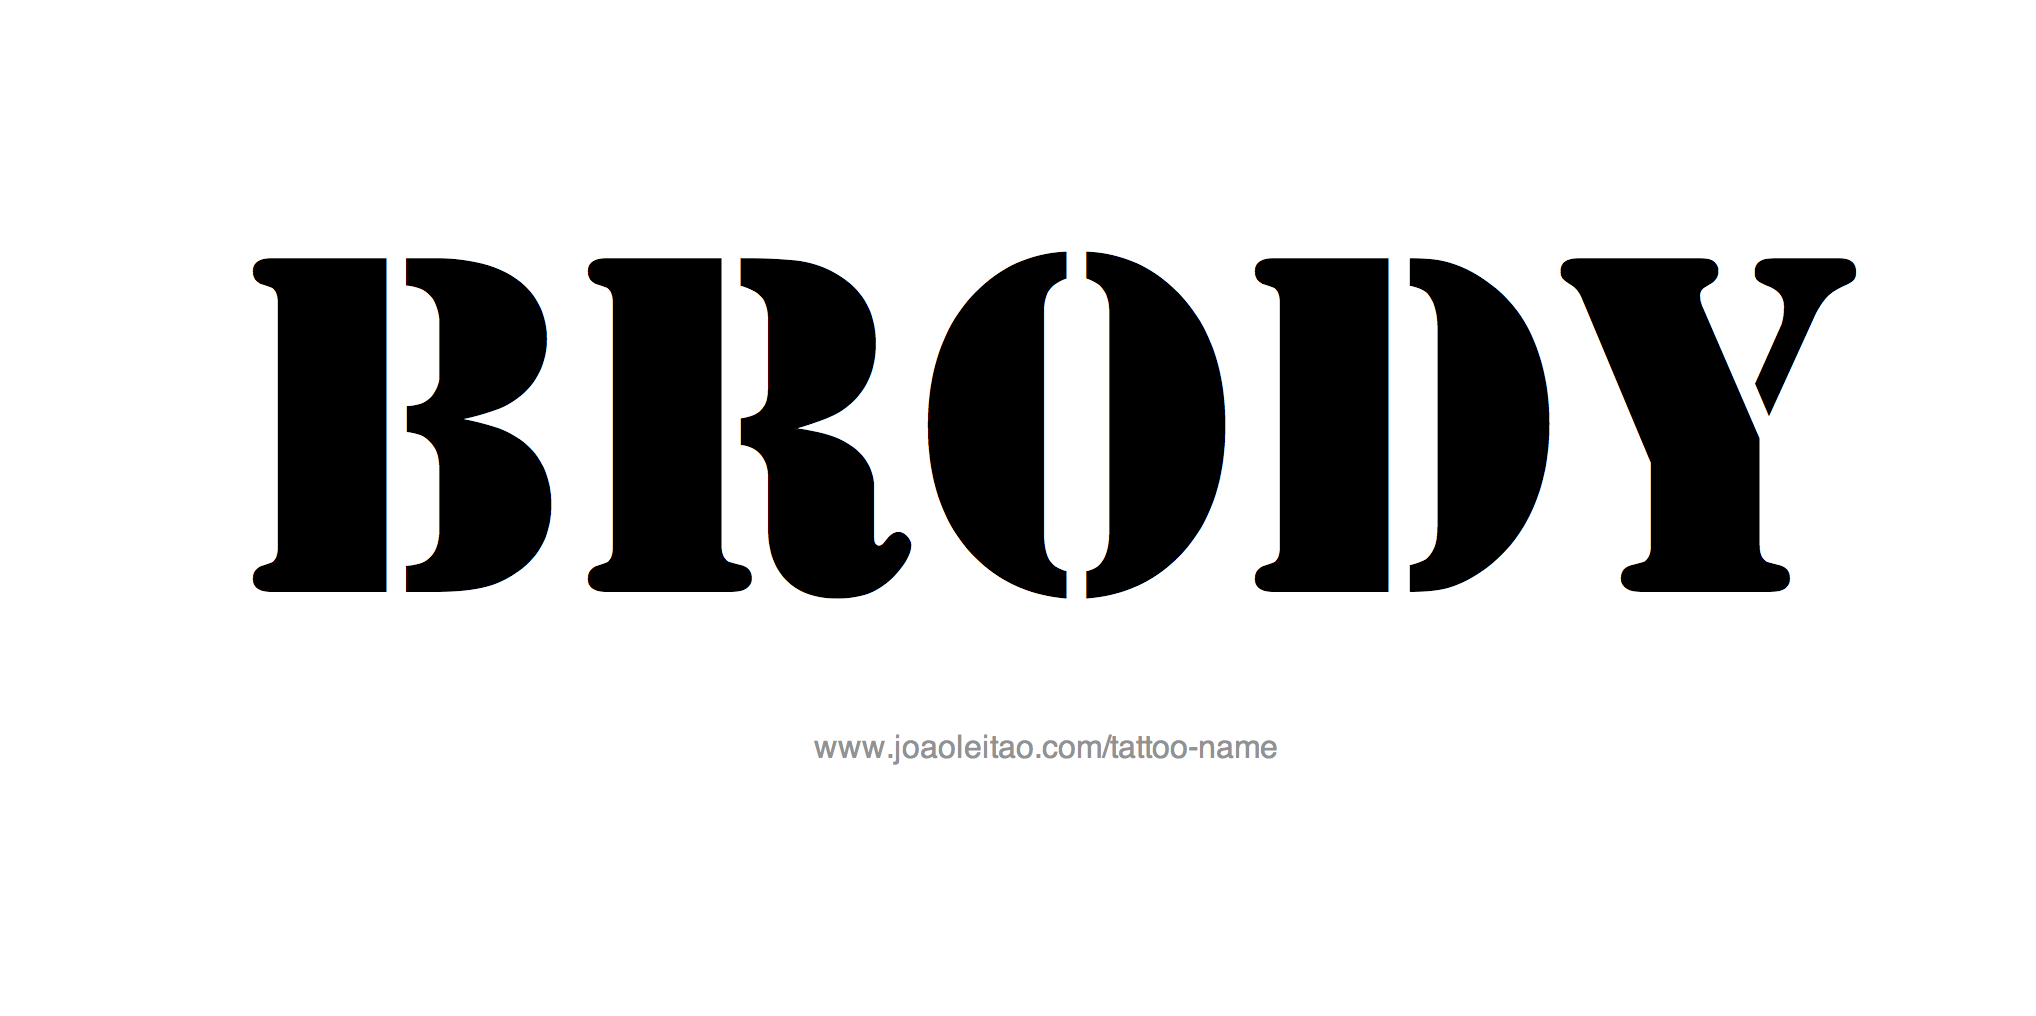 Tattoo Design Name Brody